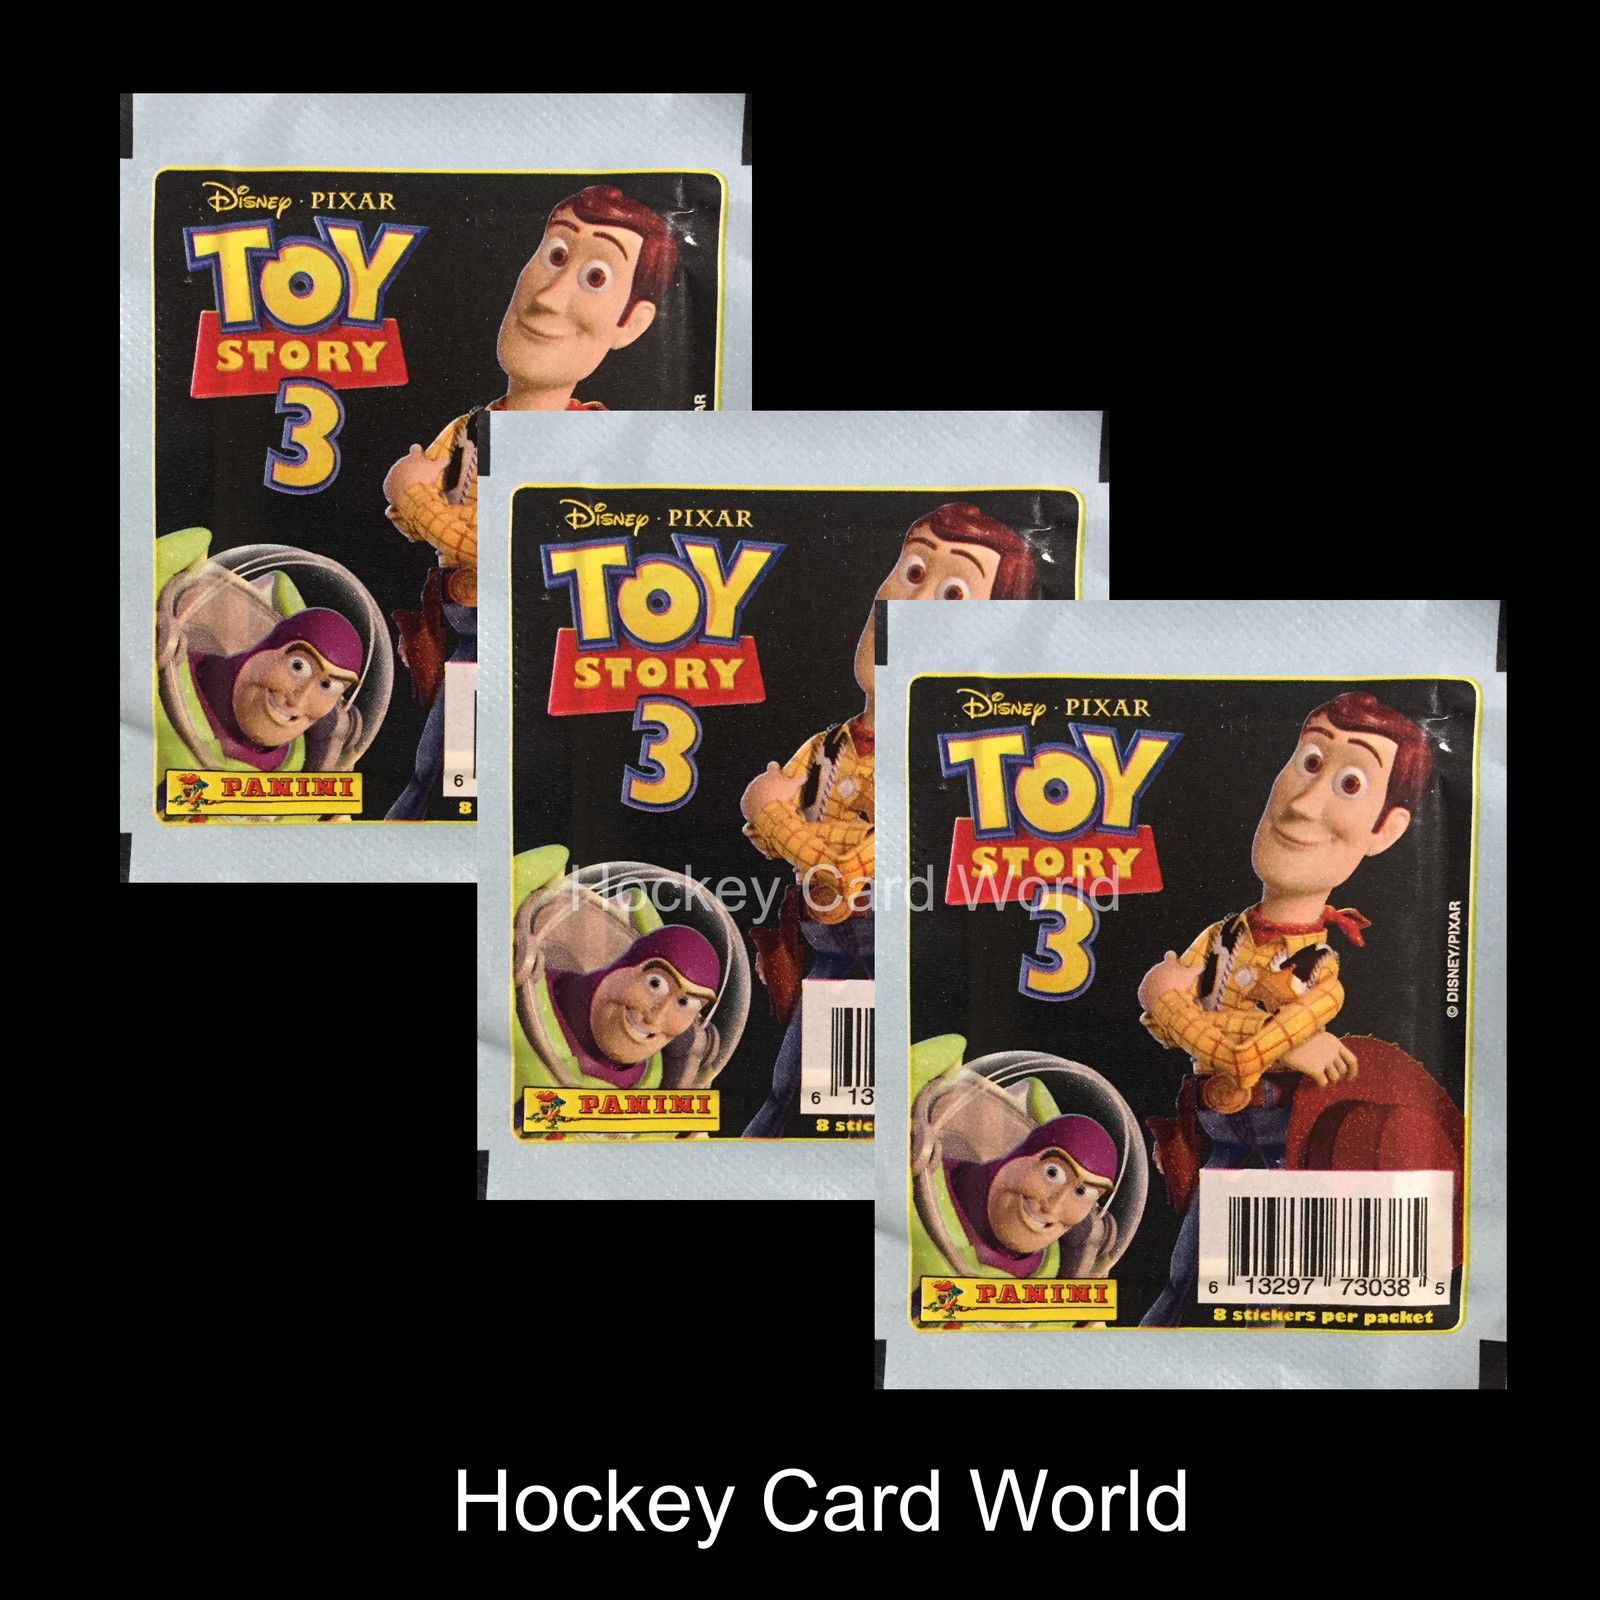  Disney Pixar Toy Story 3 Album Sticker Pack x3 (3 Pack Lot - 24 Stickers) Image 1